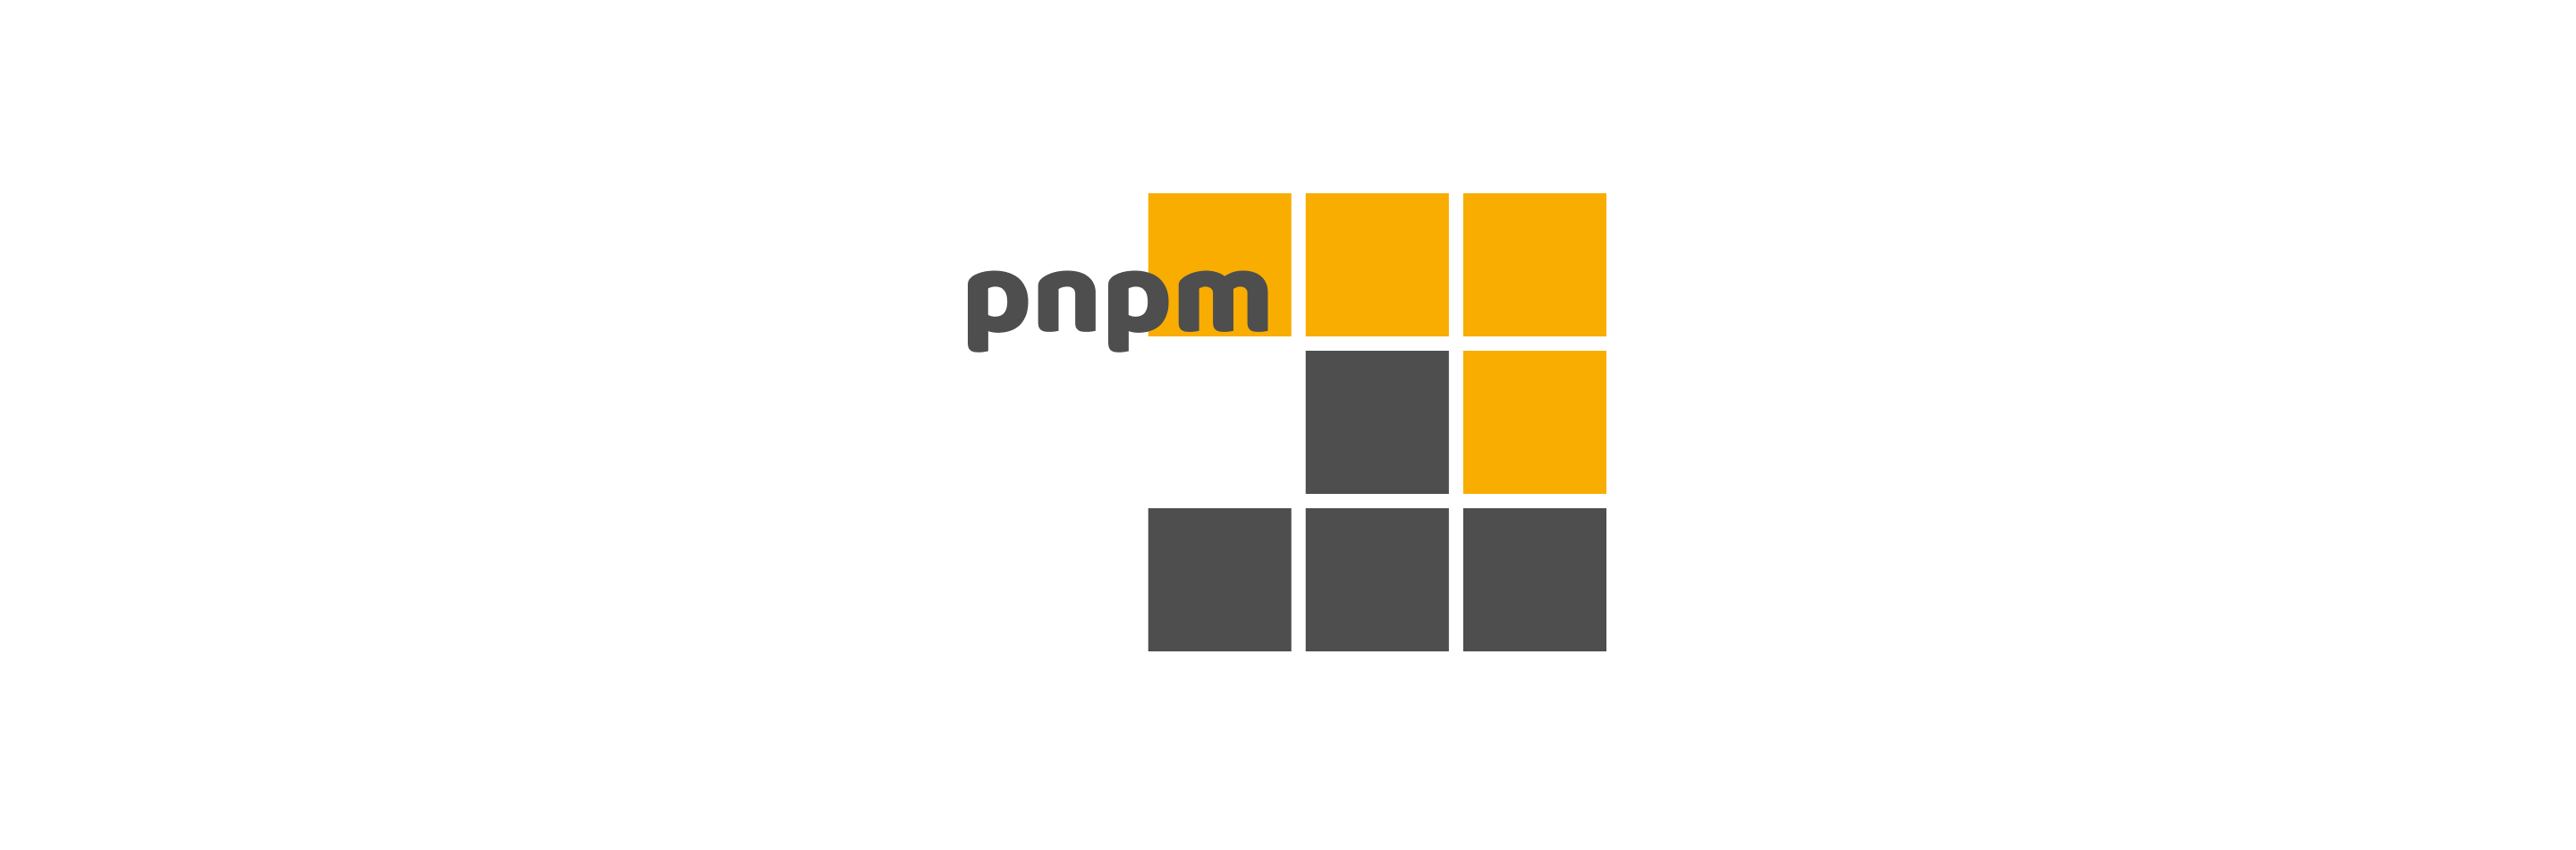 pnpm-logo